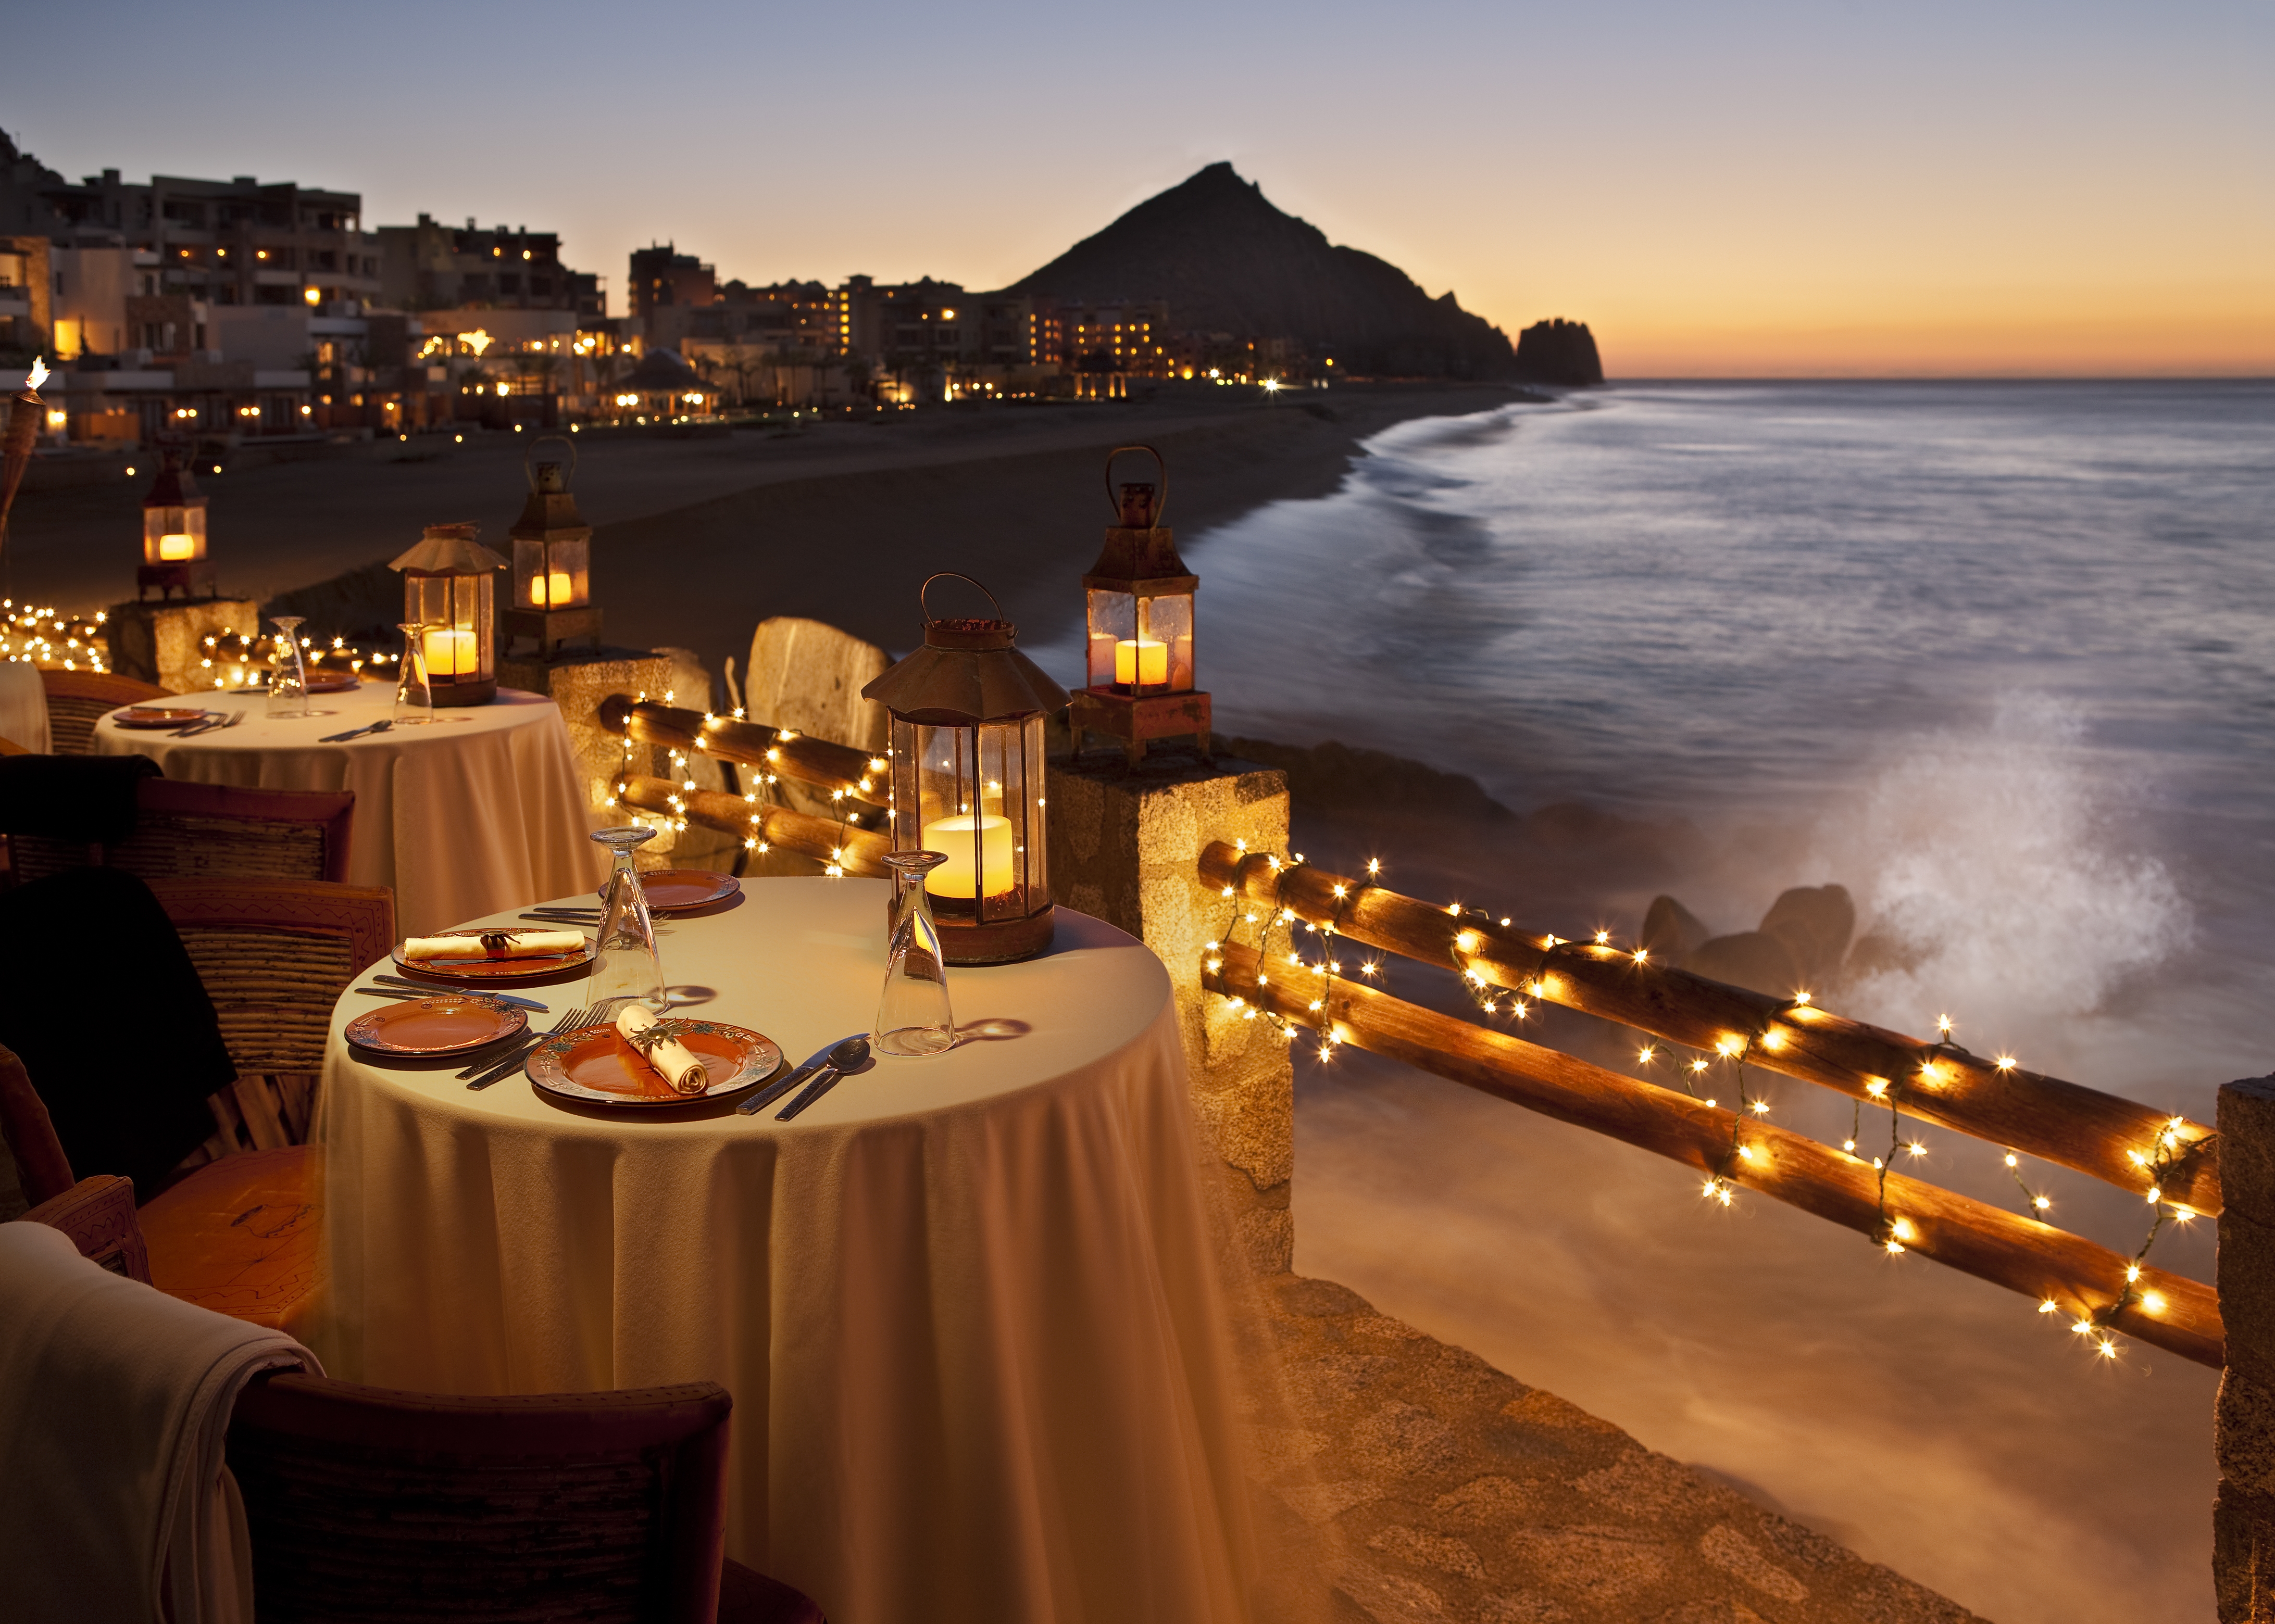 view, dinner, garland, nature, lights, coast, evening, table, supper, restaurant